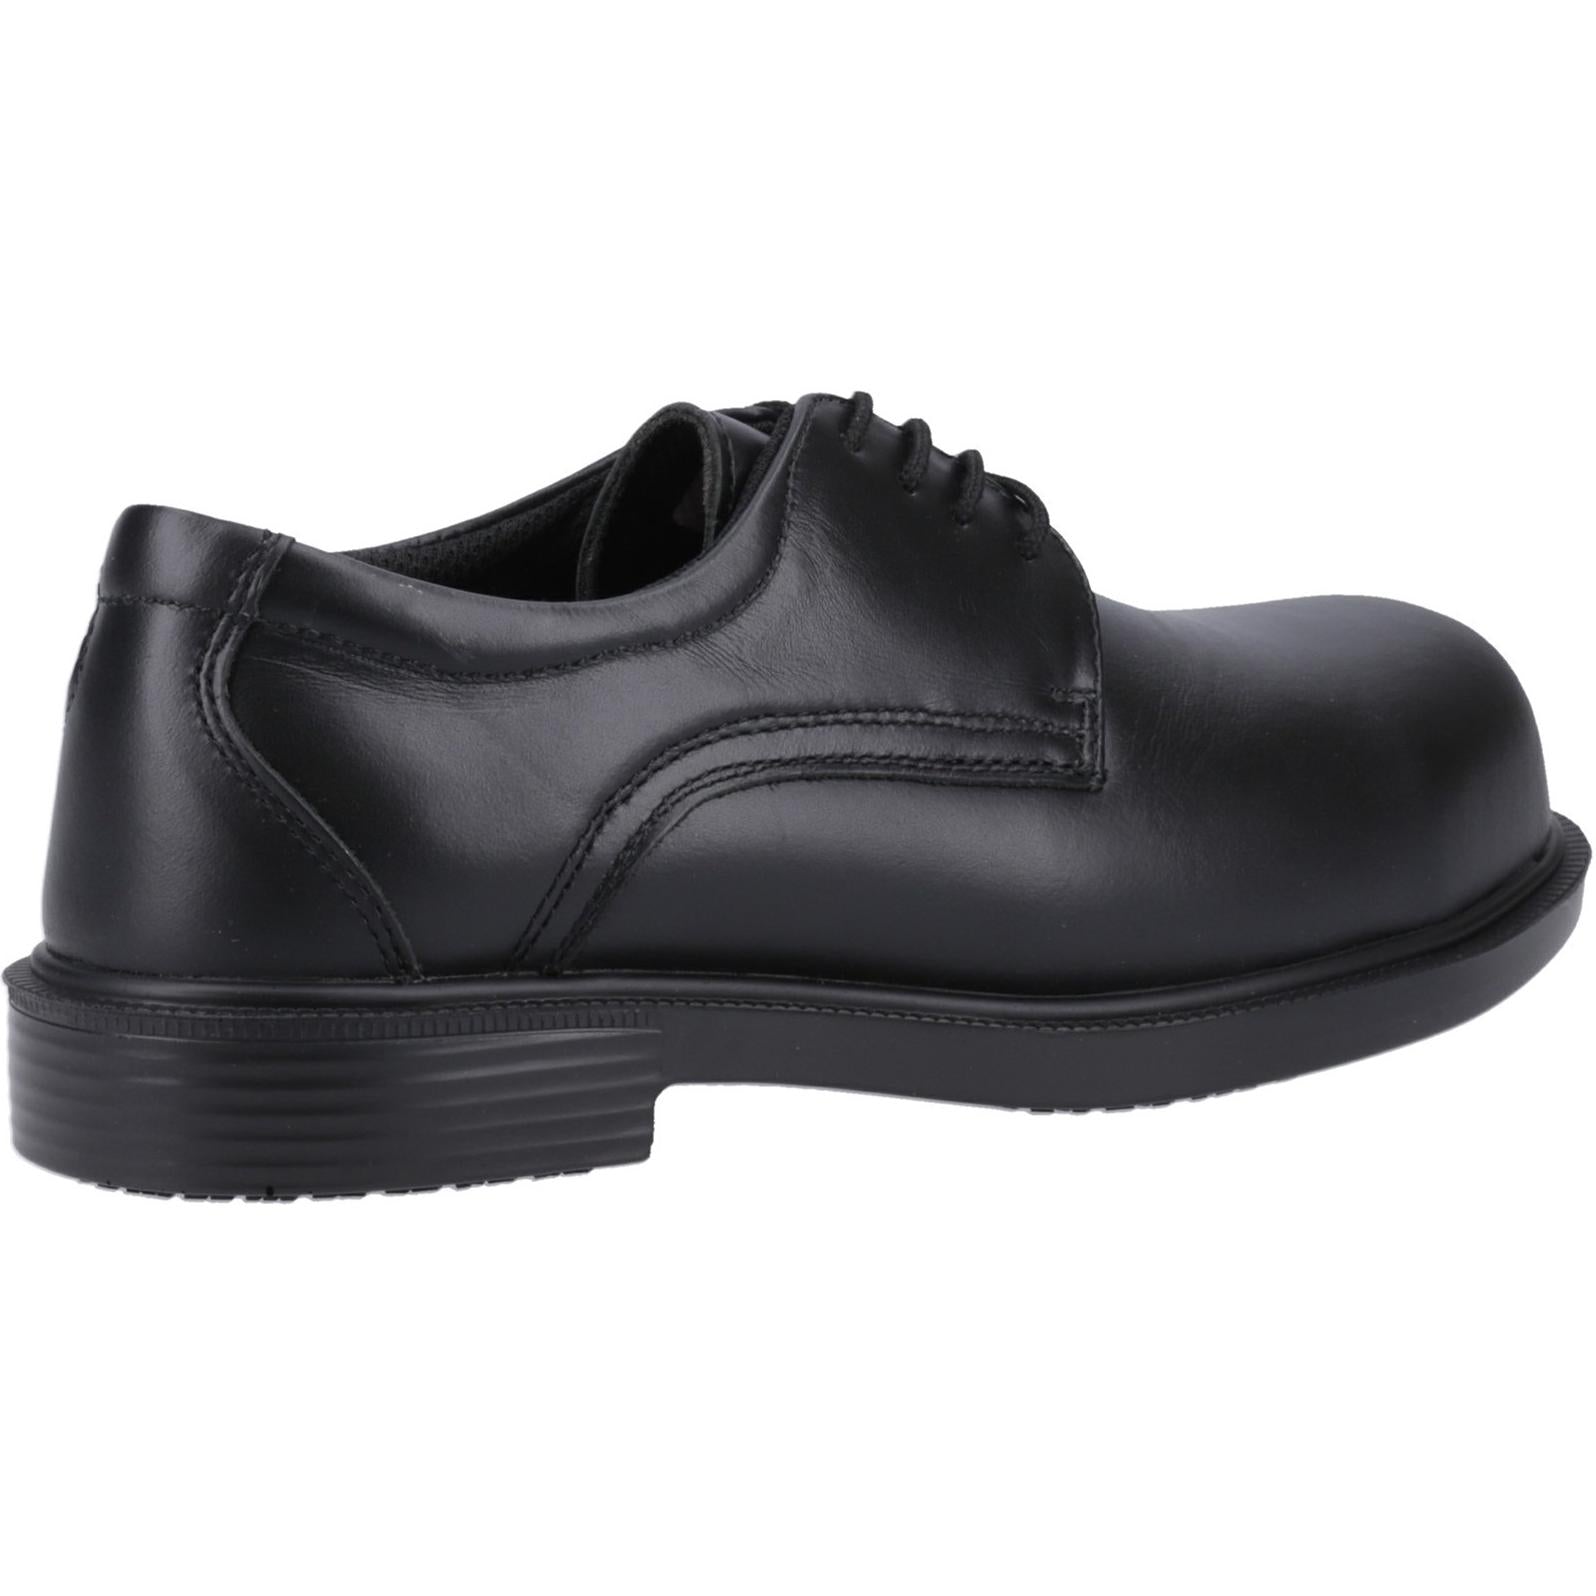 Magnum Duty Lite CT Uniform Safety Shoe